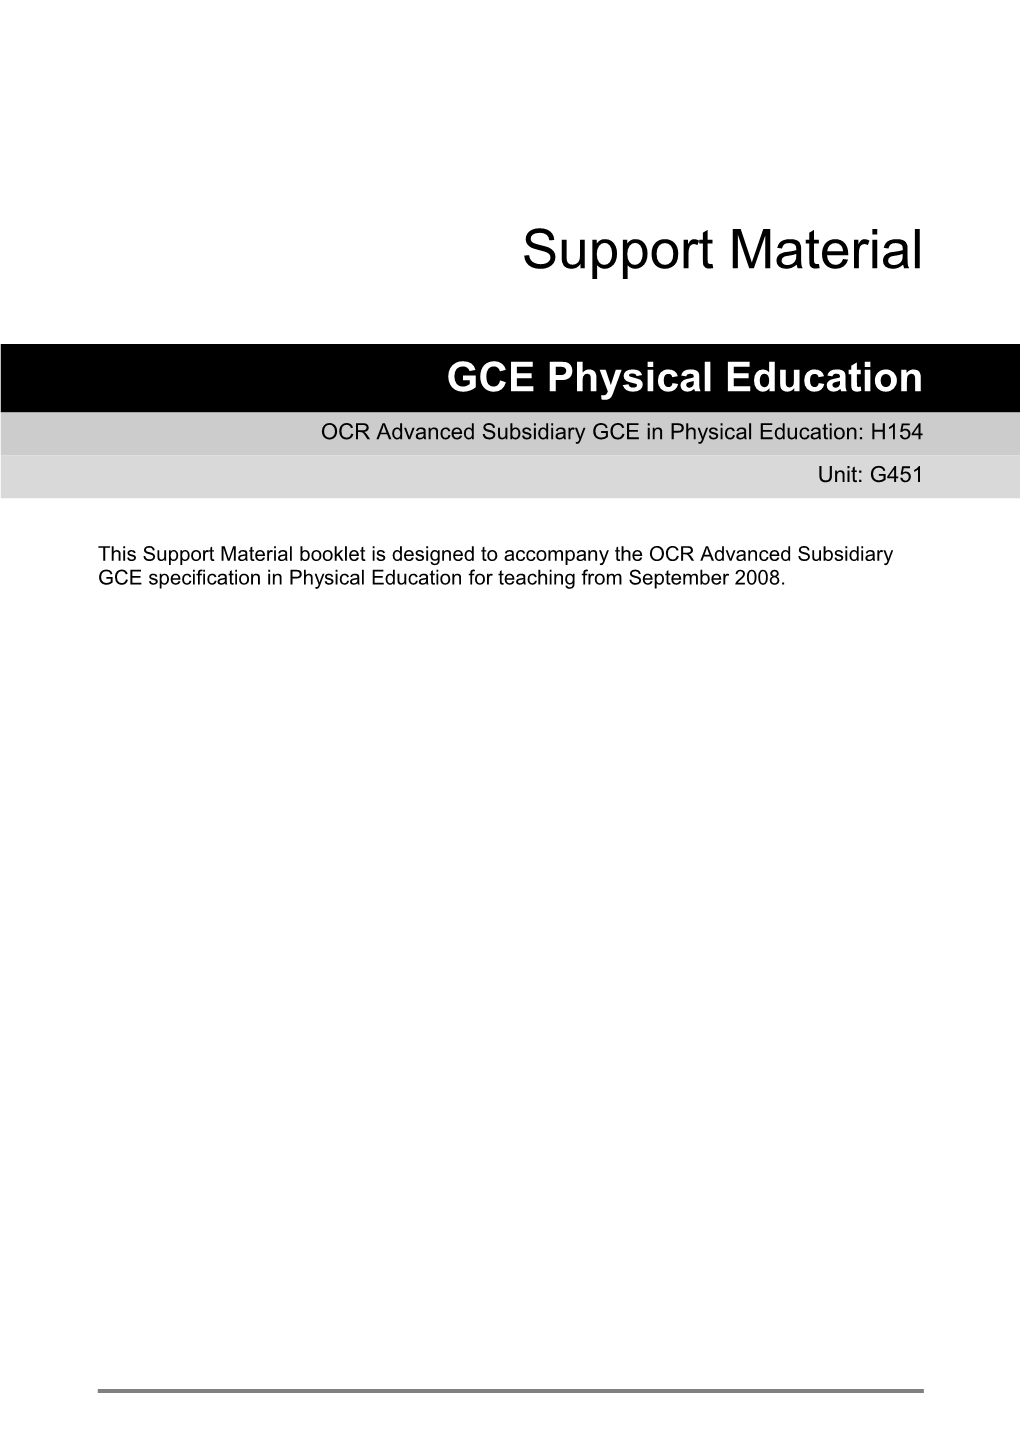 OCR Advanced Subsidiary GCE in Physical Education: H154